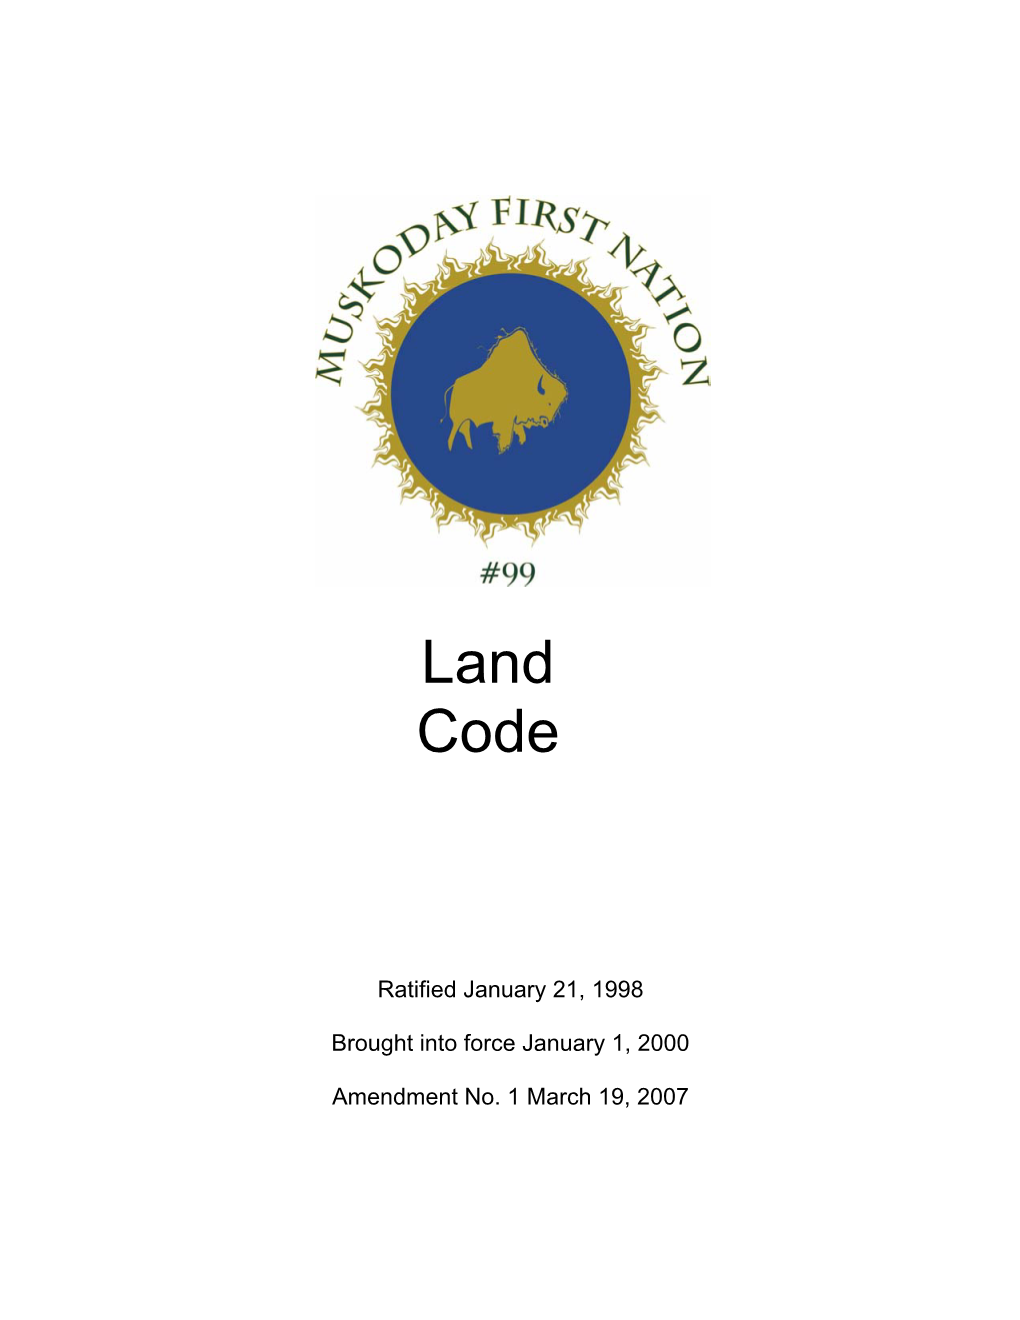 Muskoday Land Code